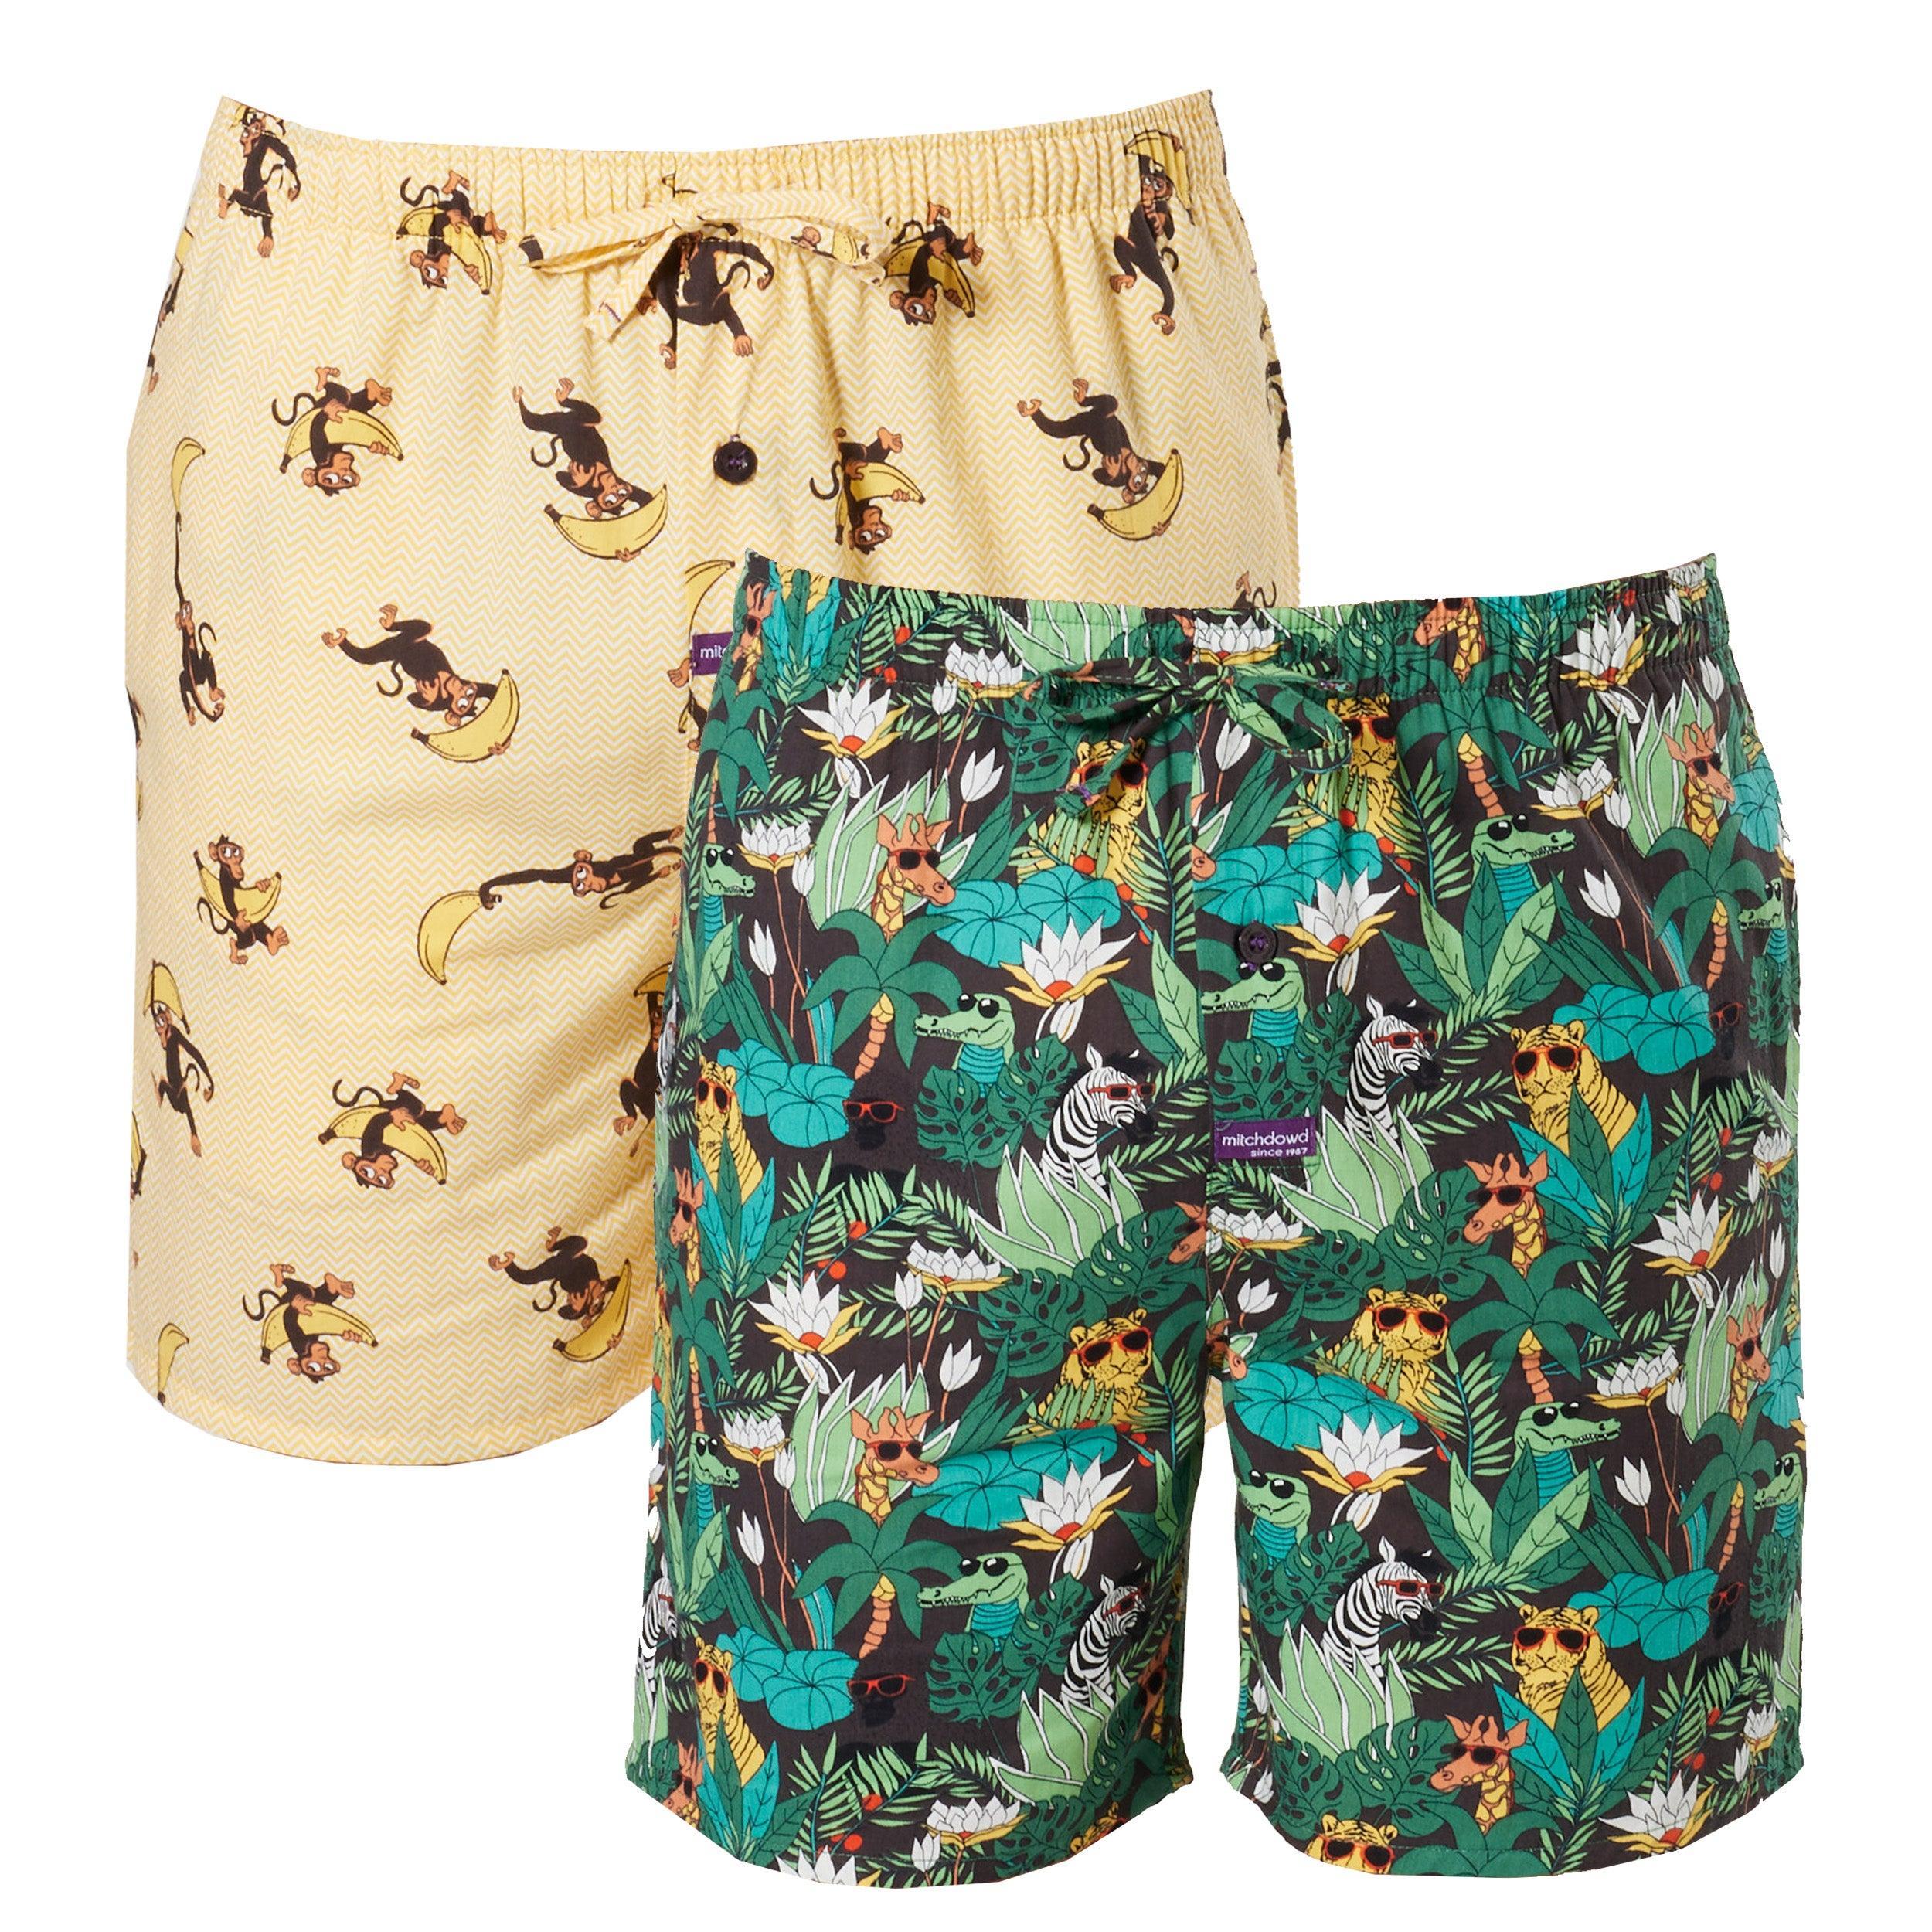 Mitch Dowd - Men's Jungle Monkey Cotton Sleep Shorts 2 Pack - Green & Yellow